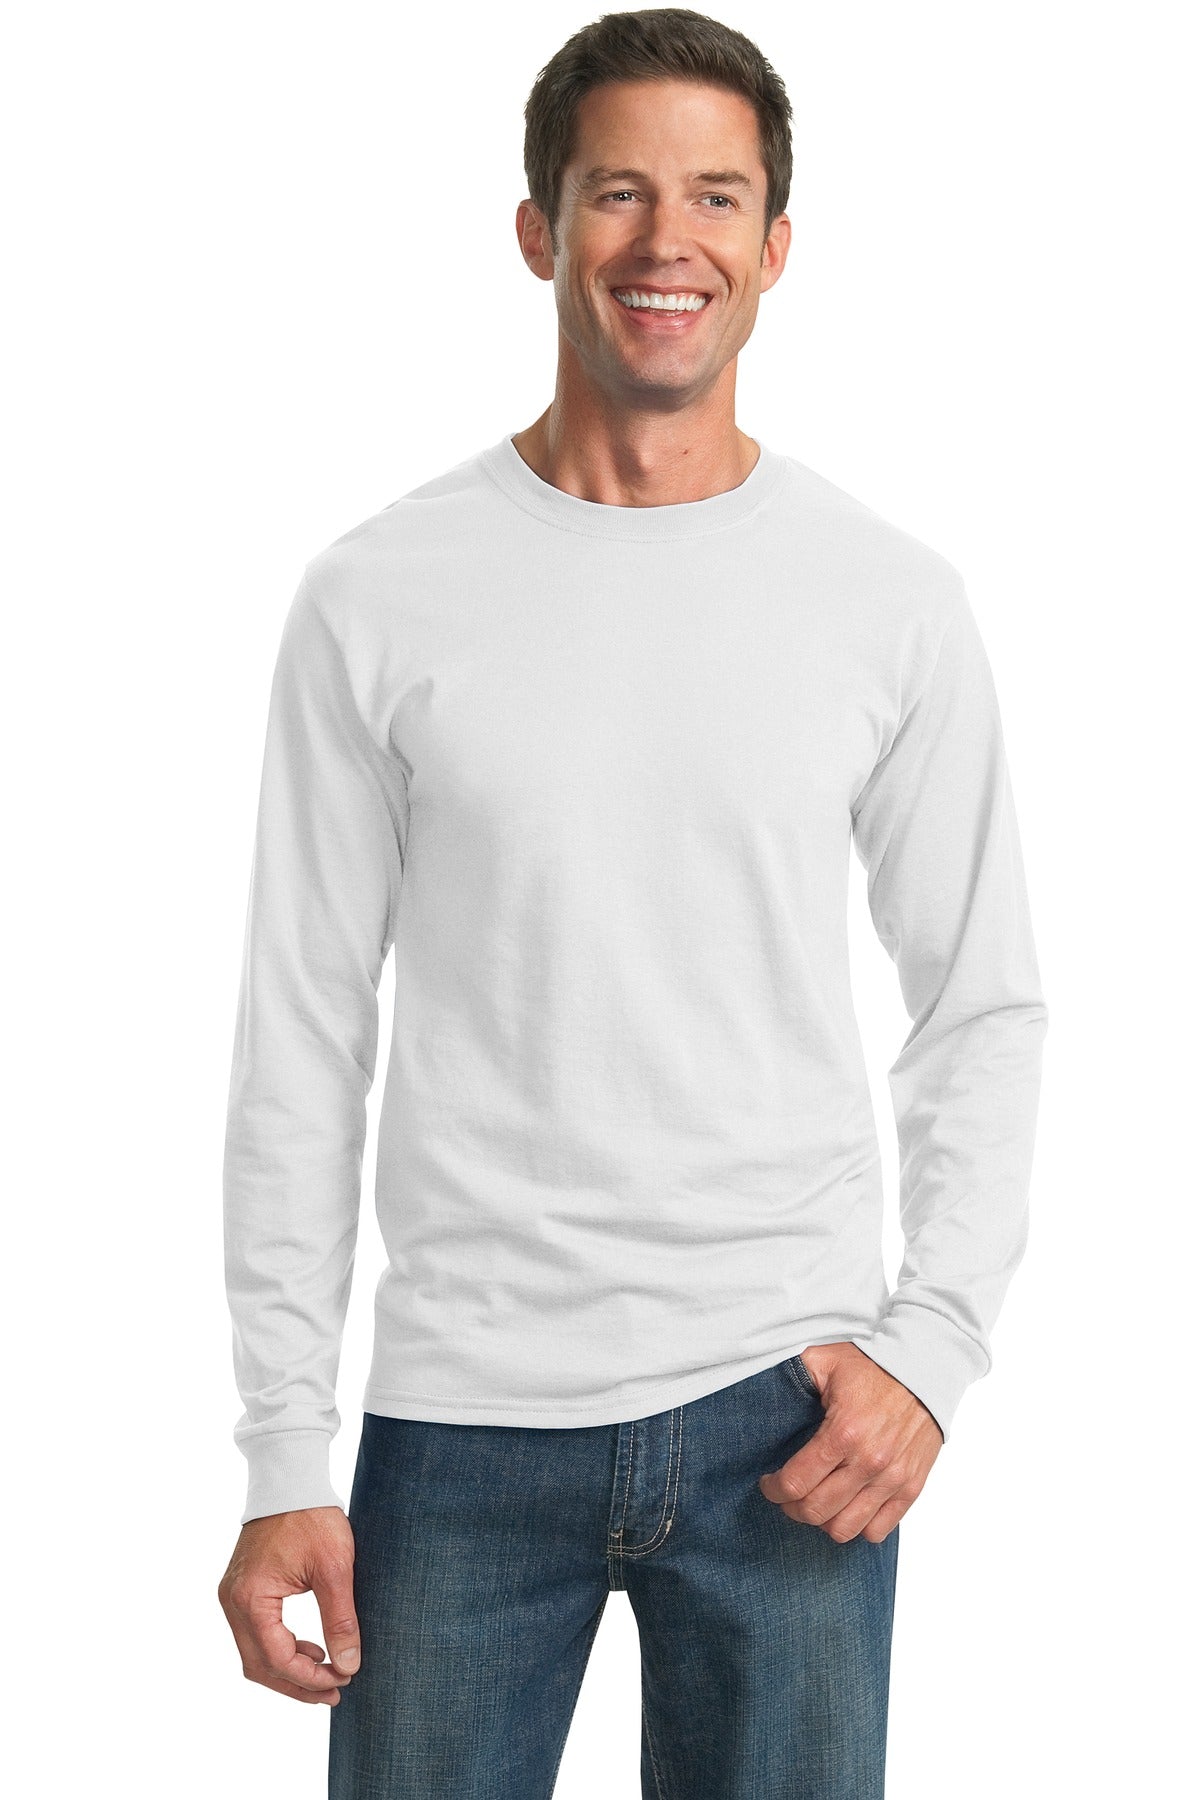 JERZEES® - Dri-Power® 50/50 Cotton/Poly Long Sleeve T-Shirt. 29LS [White] - DFW Impression